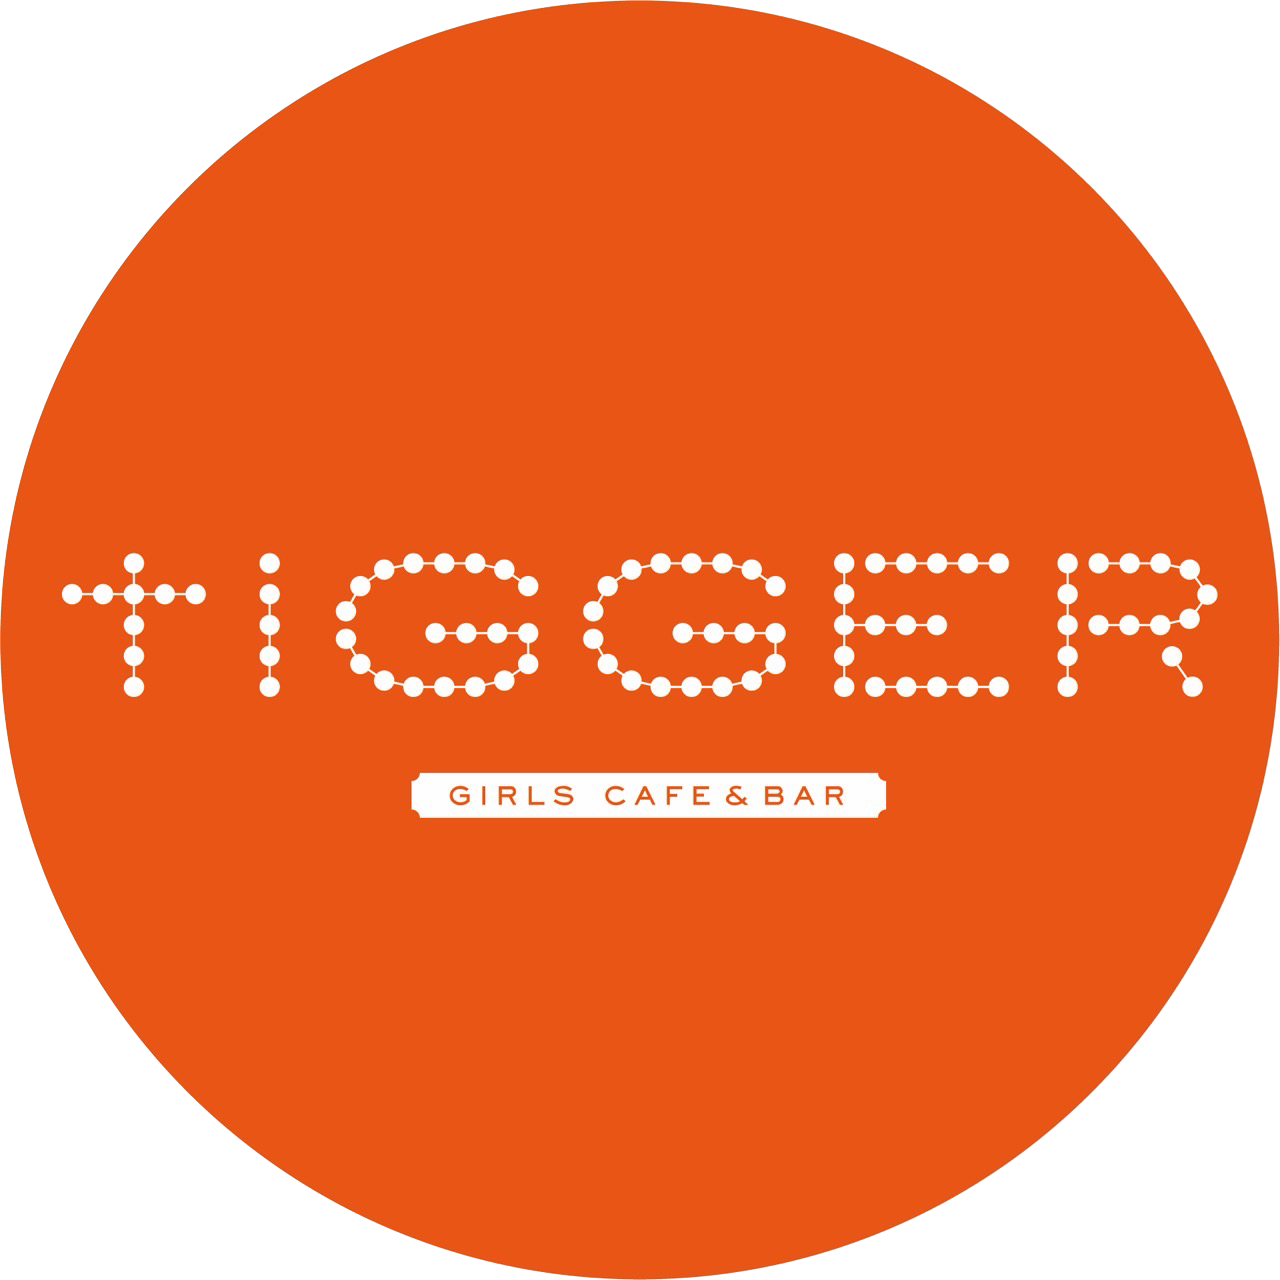 tigger